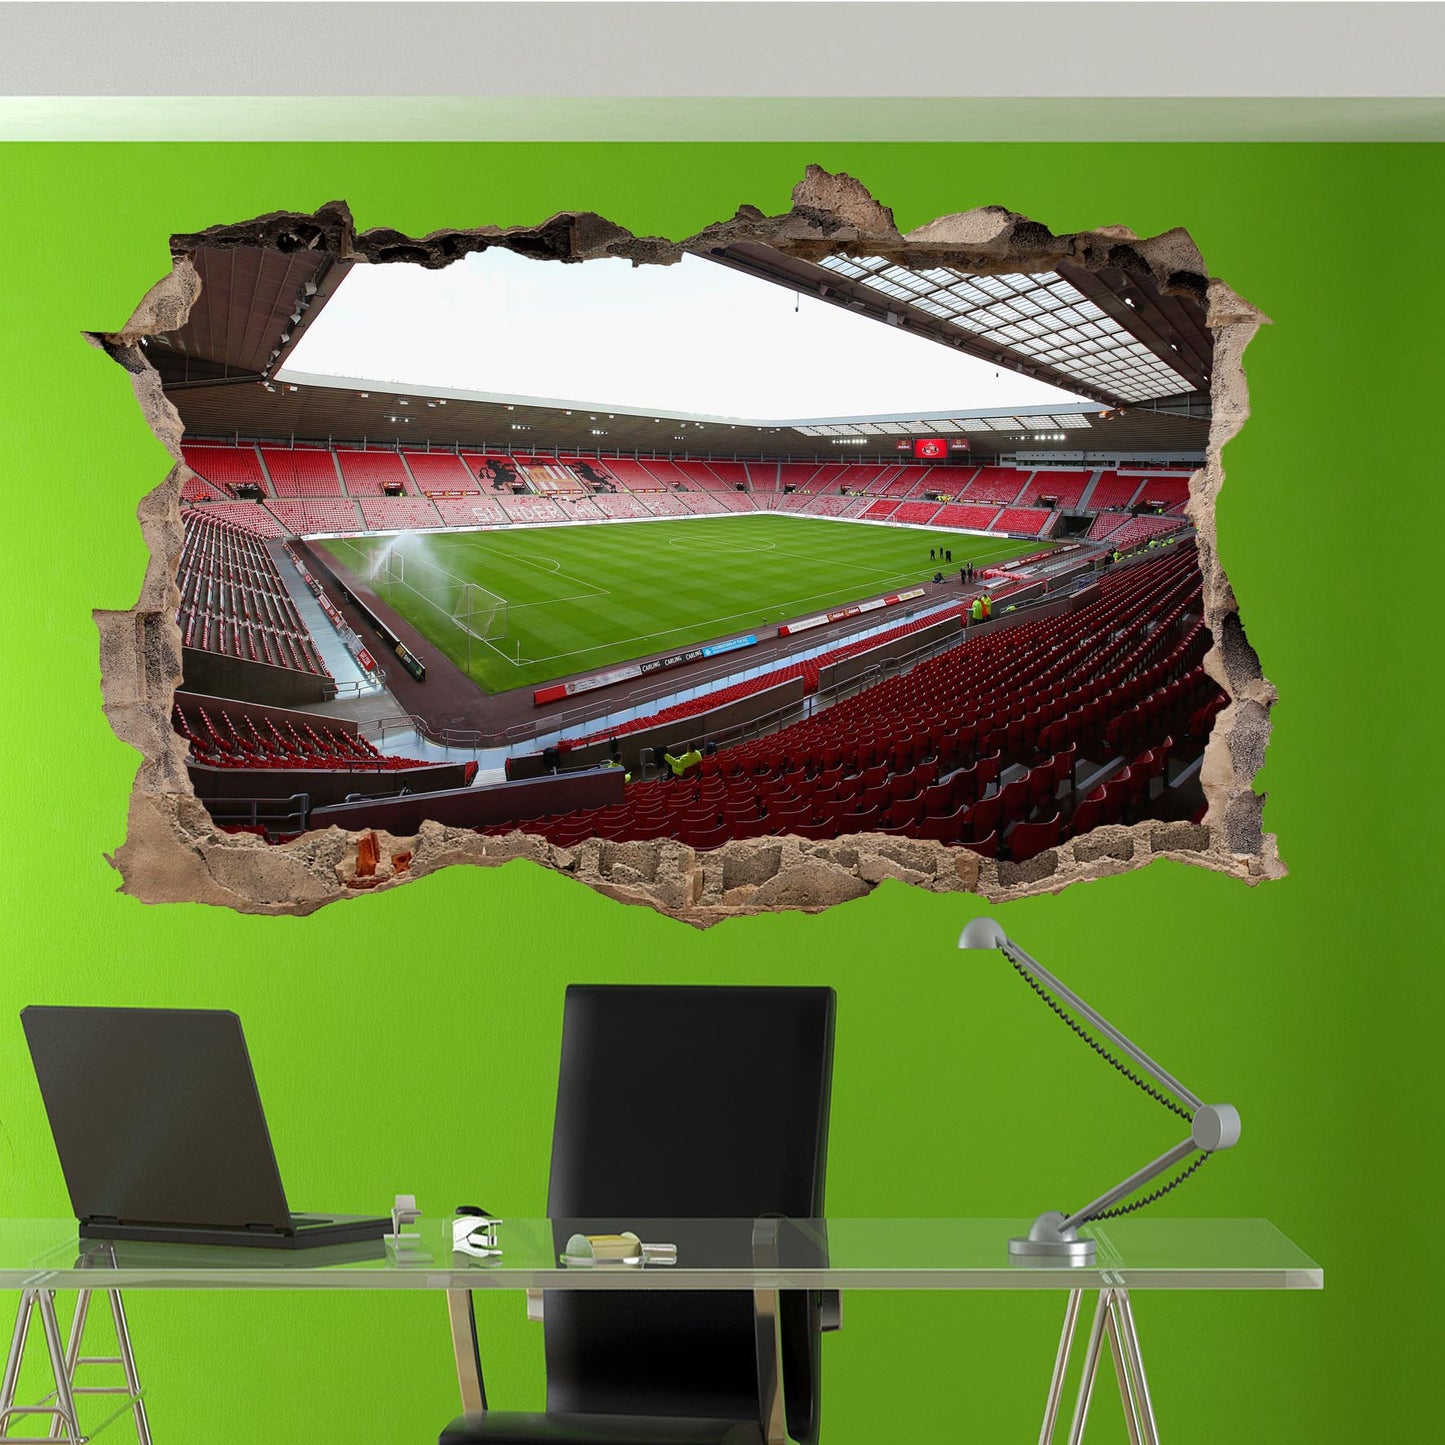 Sunderland Stadium of Light Football Stadium Wall Sticker Mural Decal 3d Effect Room Office Home Decor